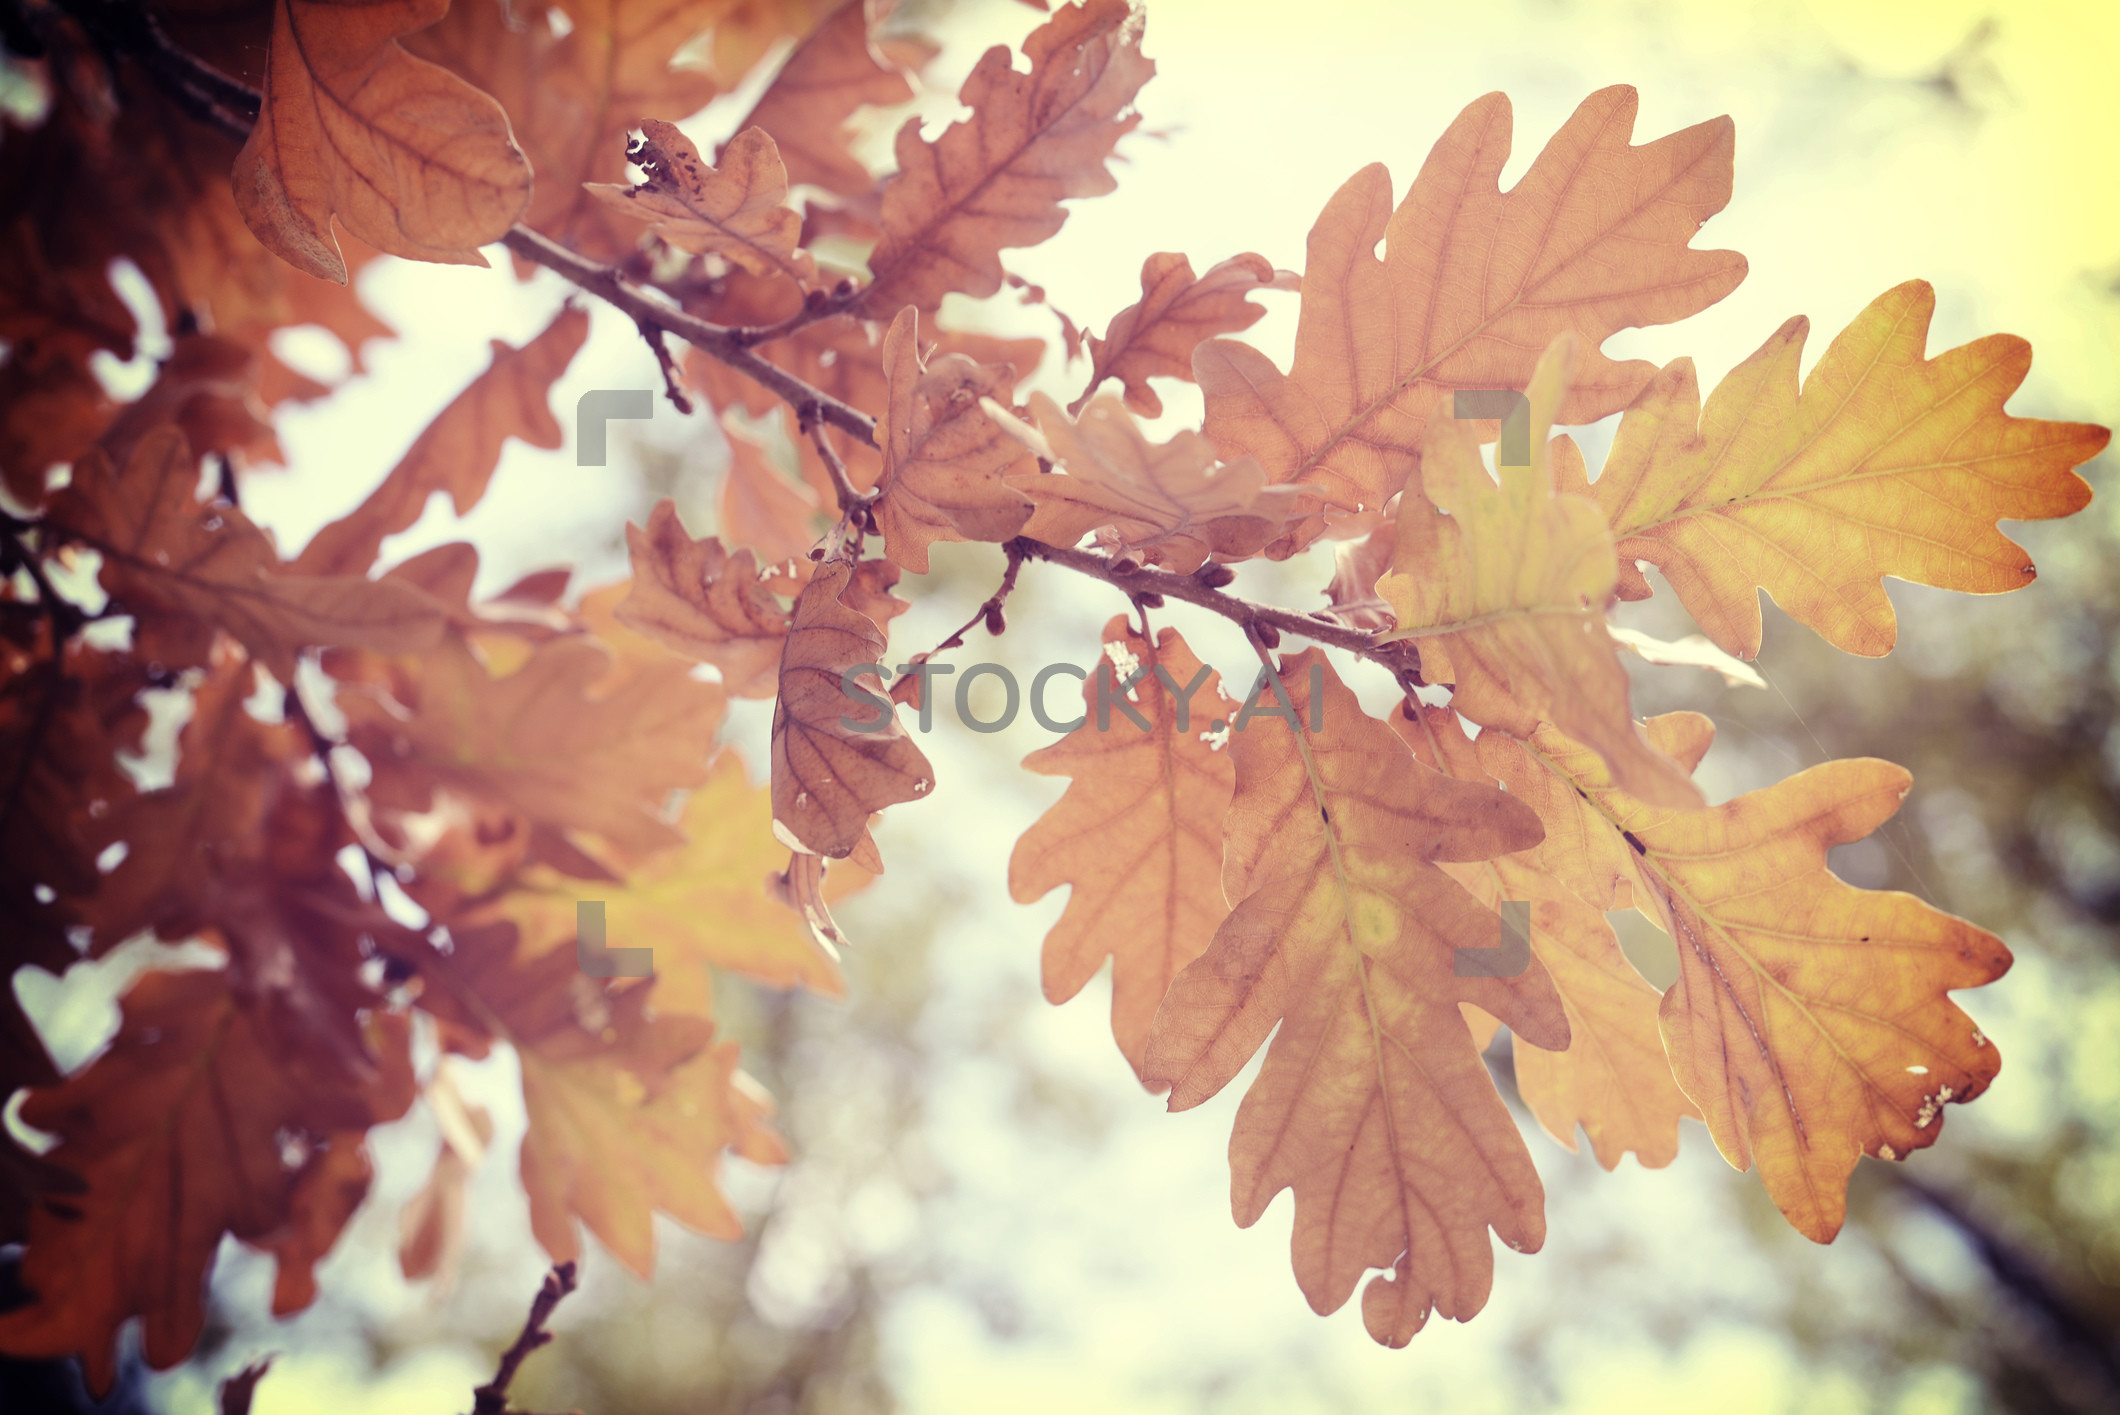 2120x1415 Image of Fall foliage season background oak vintage leaf